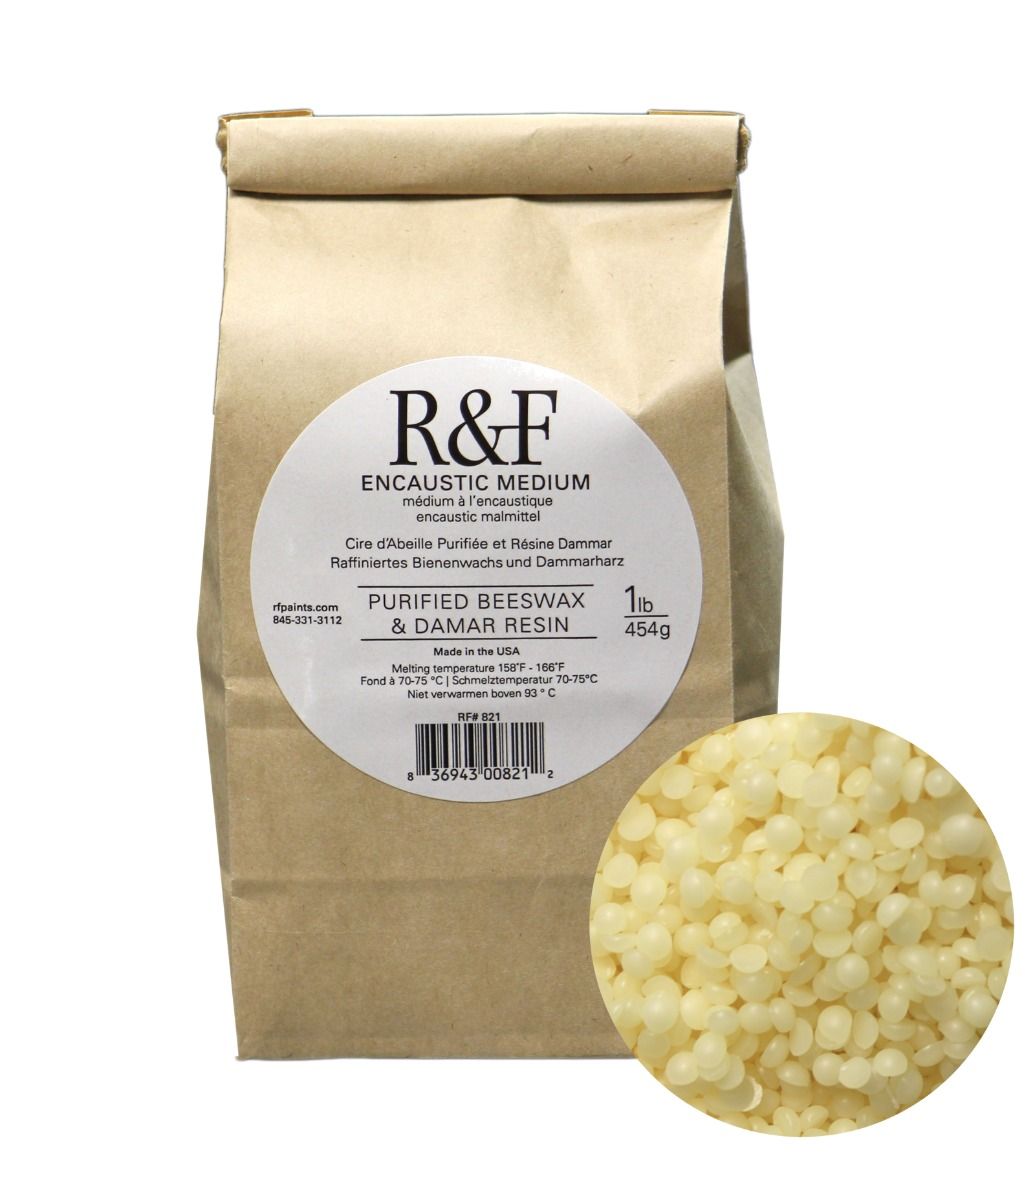 R&F Encaustic Purified Beeswax & Damar Resin Medium 1lb (454g) bag